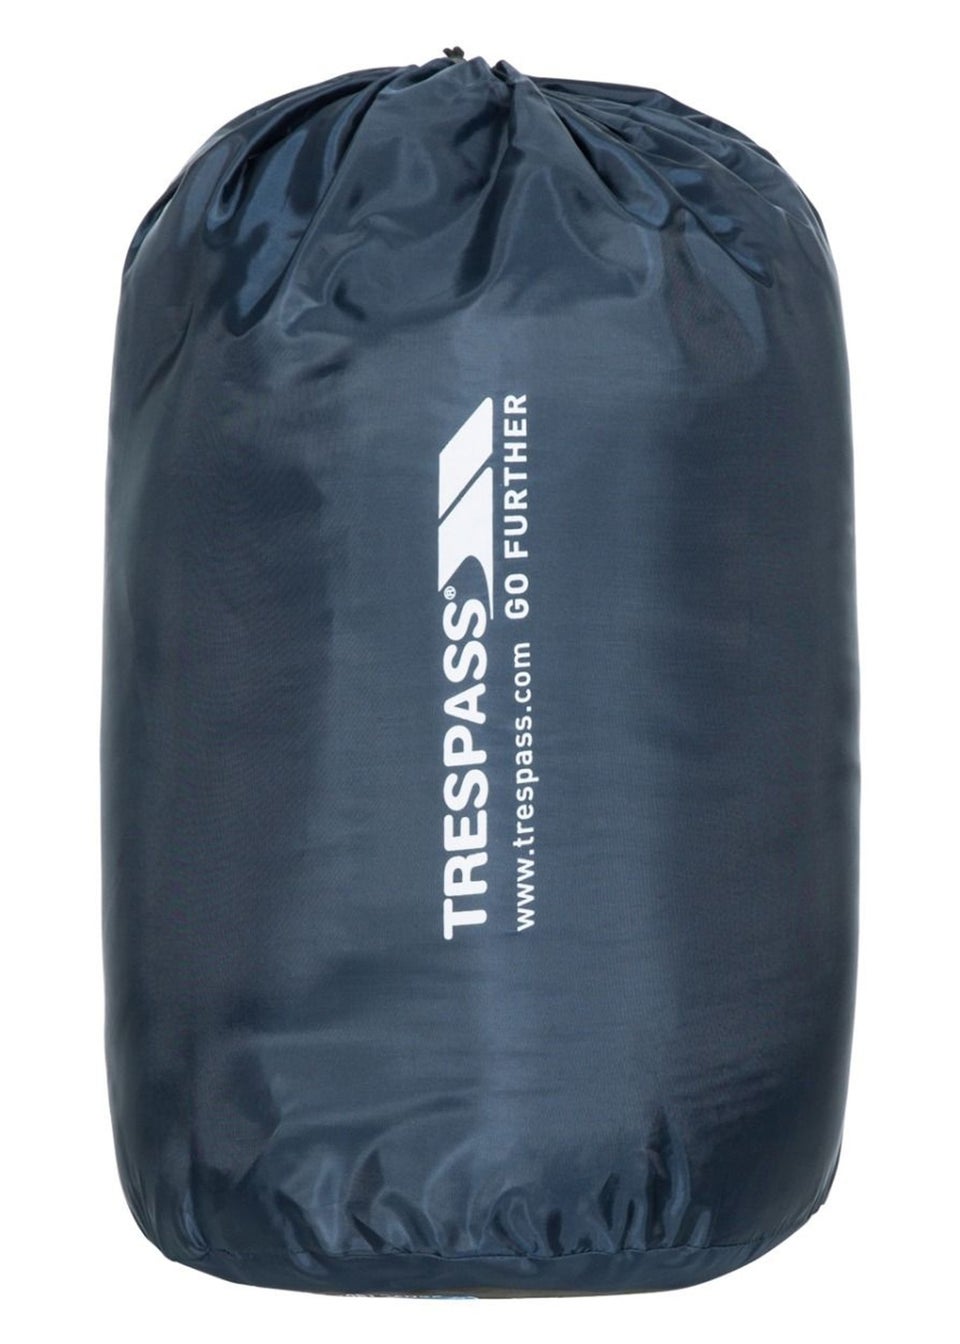 Trespass Navy Catnap 3 Season Double Sleeping Bag